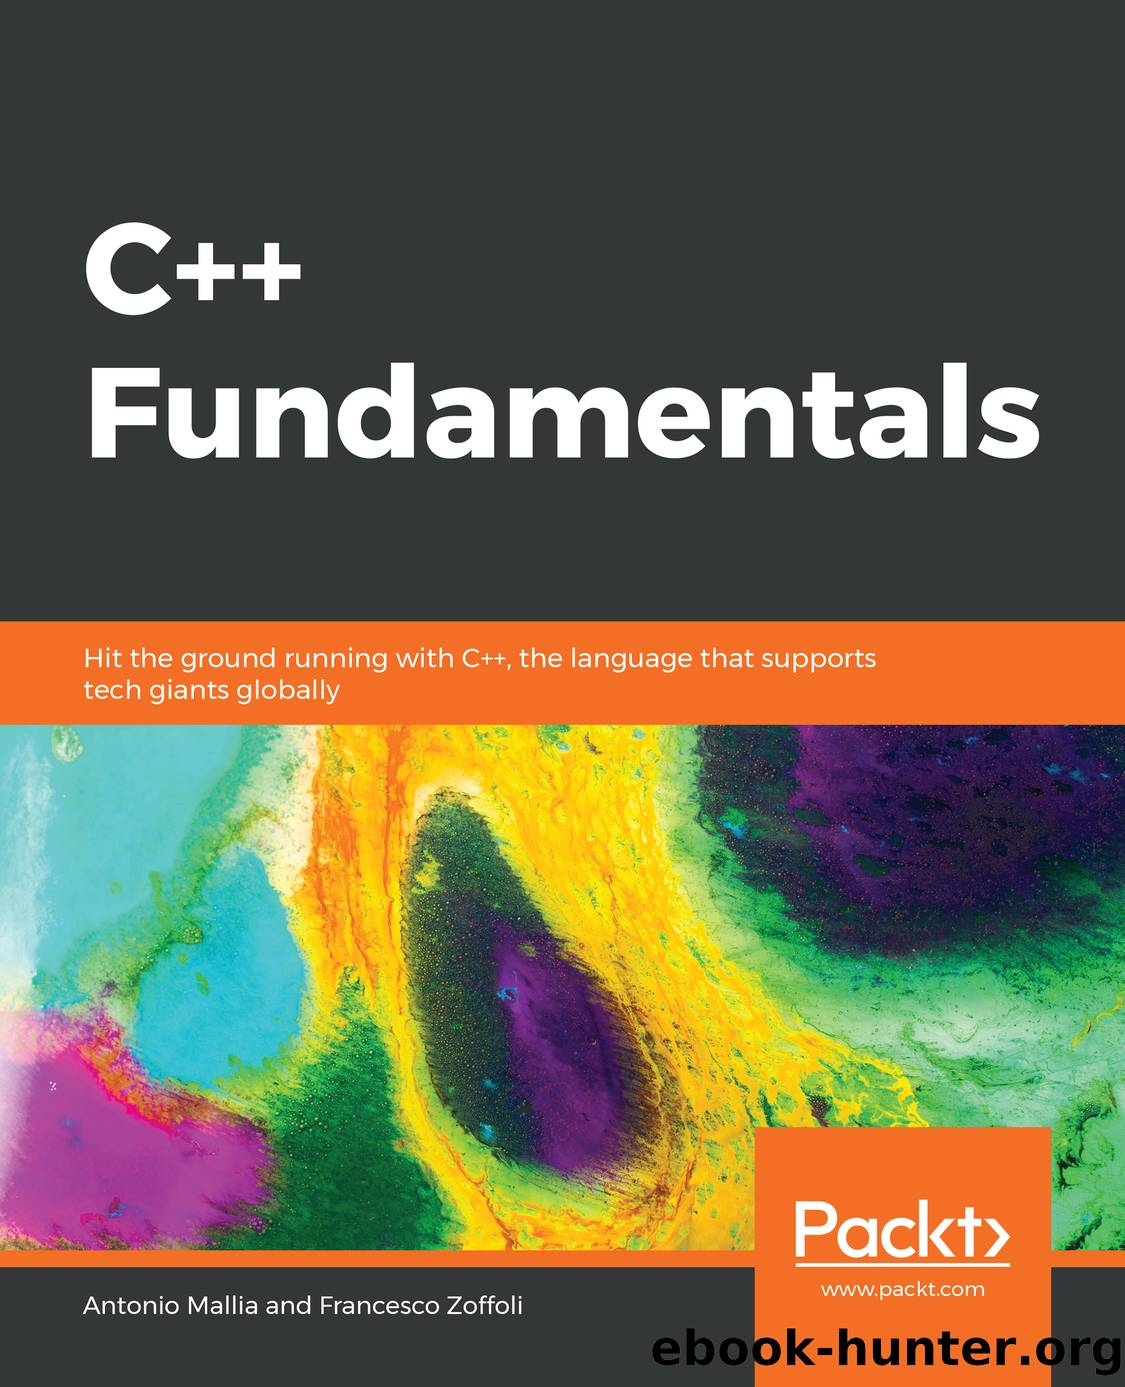 C++ Fundamentals by Antonio Mallia